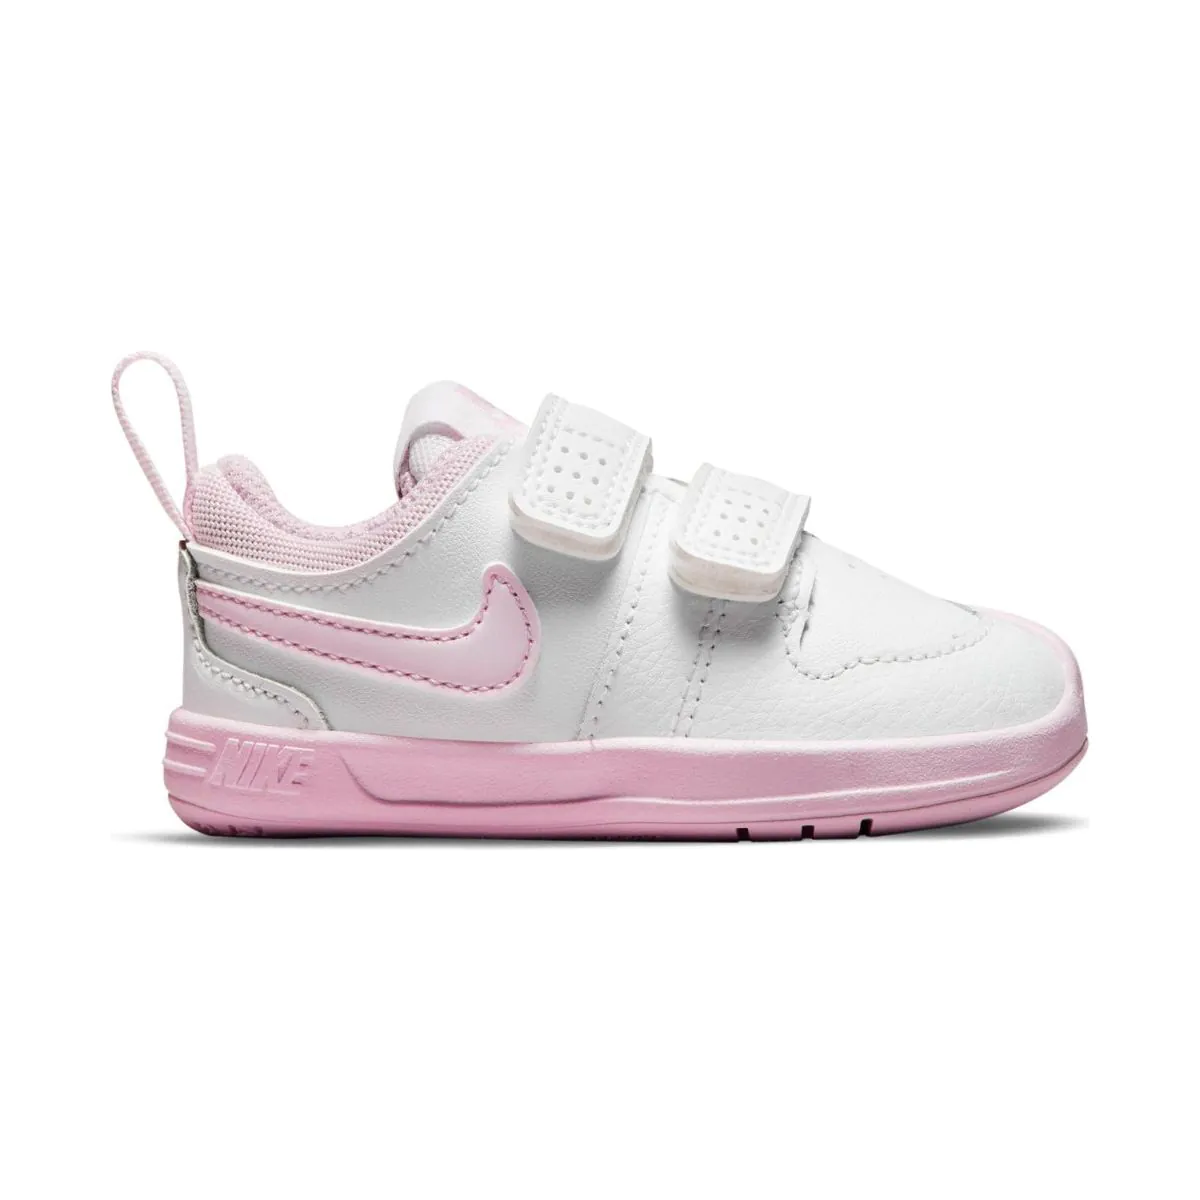 Nike Pico 5 Toddler Sport Shoes AR4162-105